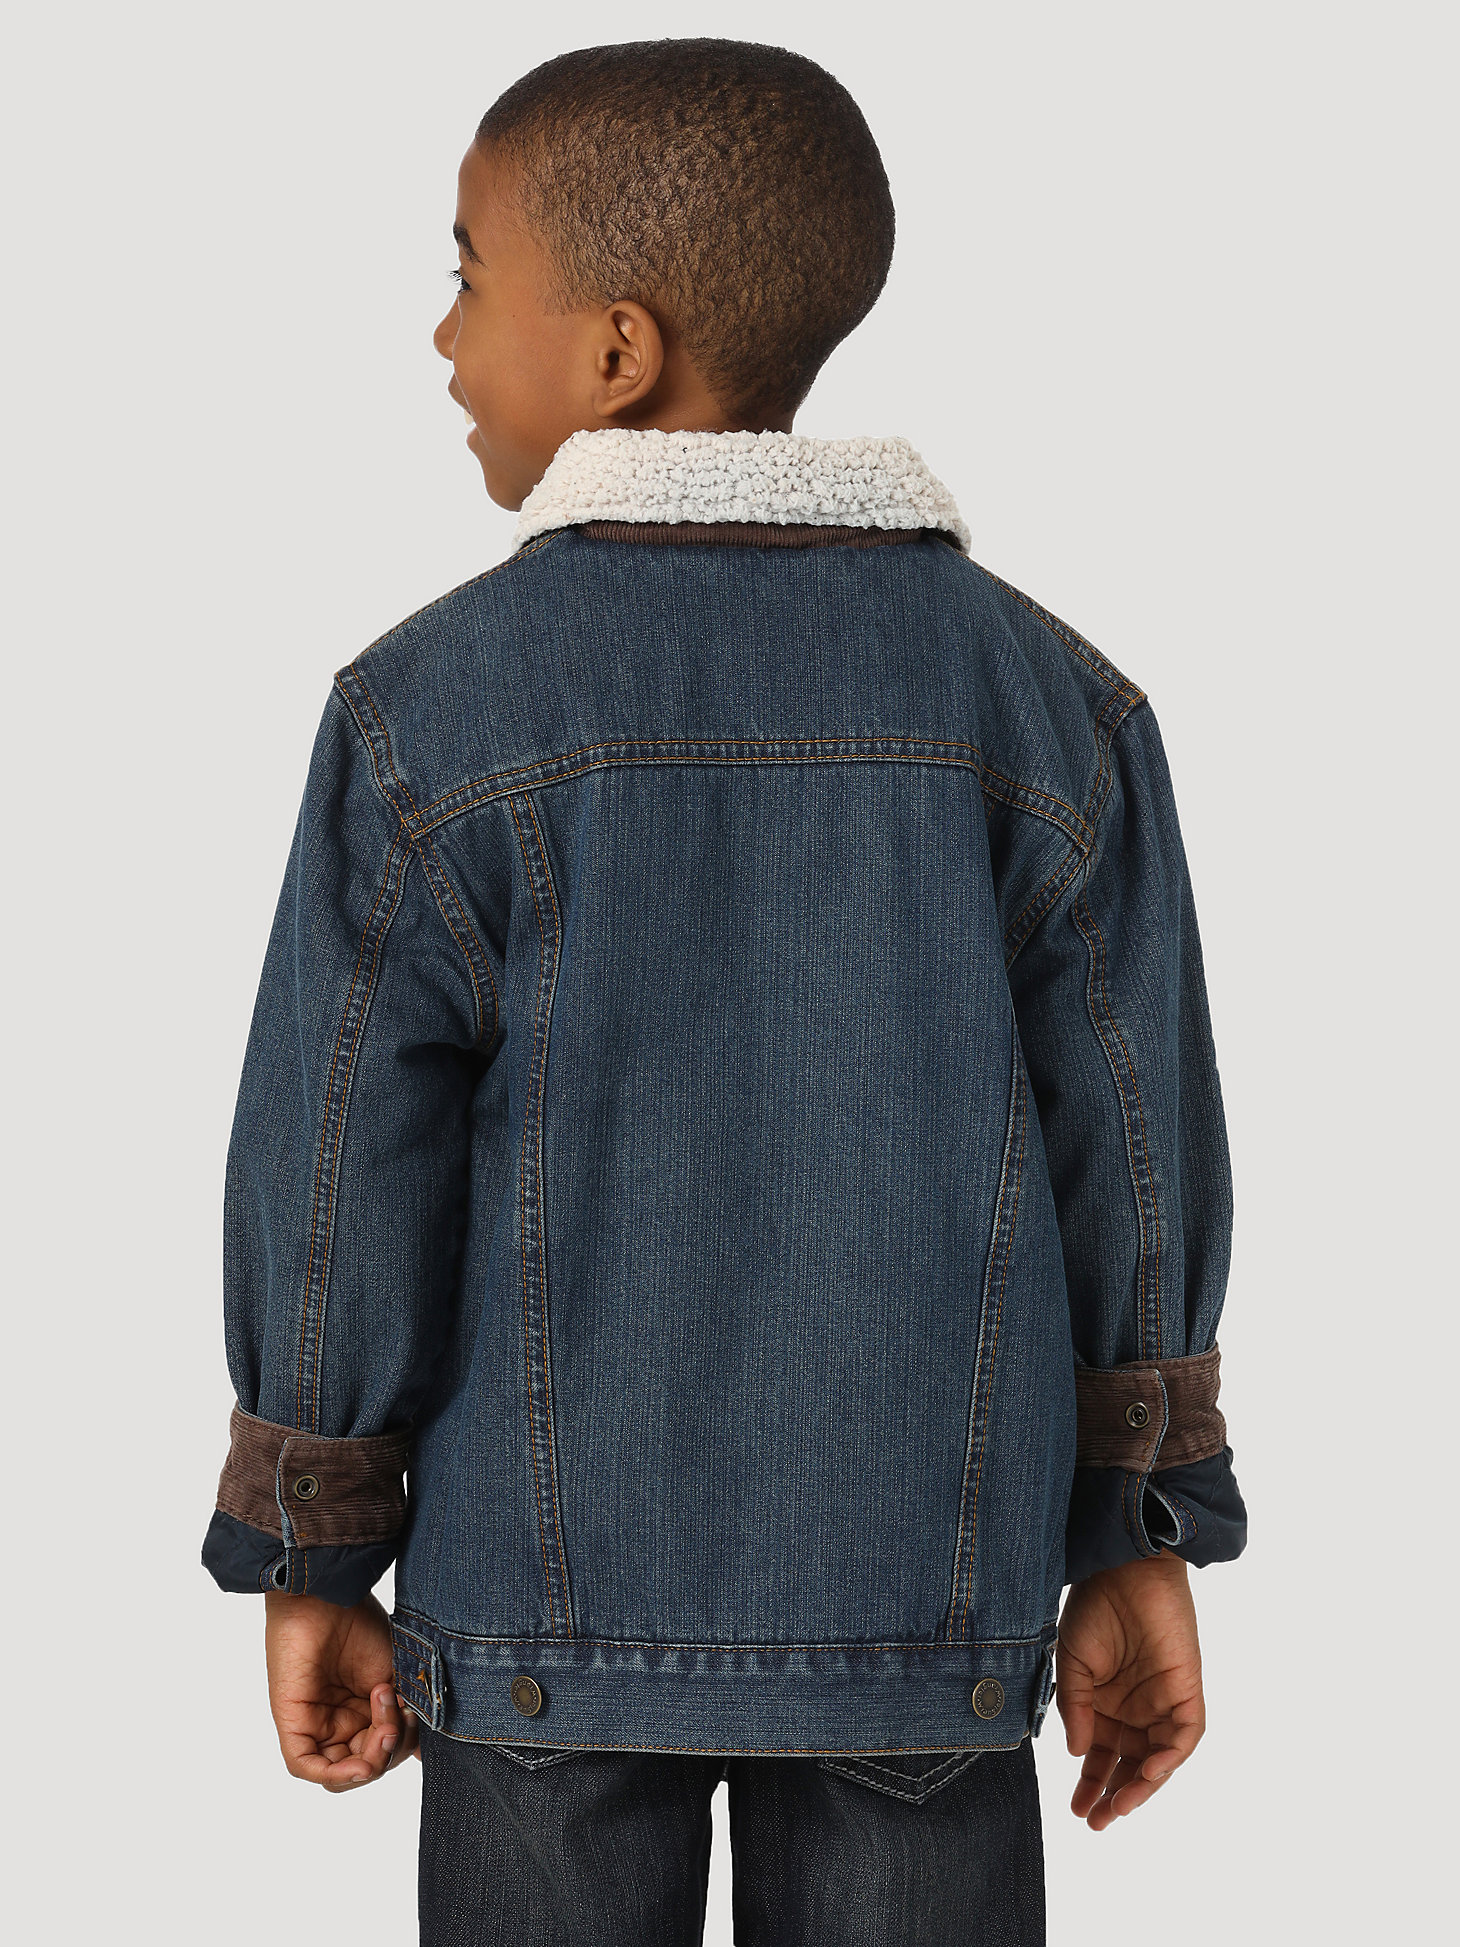 Boy’s Wrangler® Western Styled Sherpa Lined Denim Jacket Rustic in Rustic Blue alternative view 5